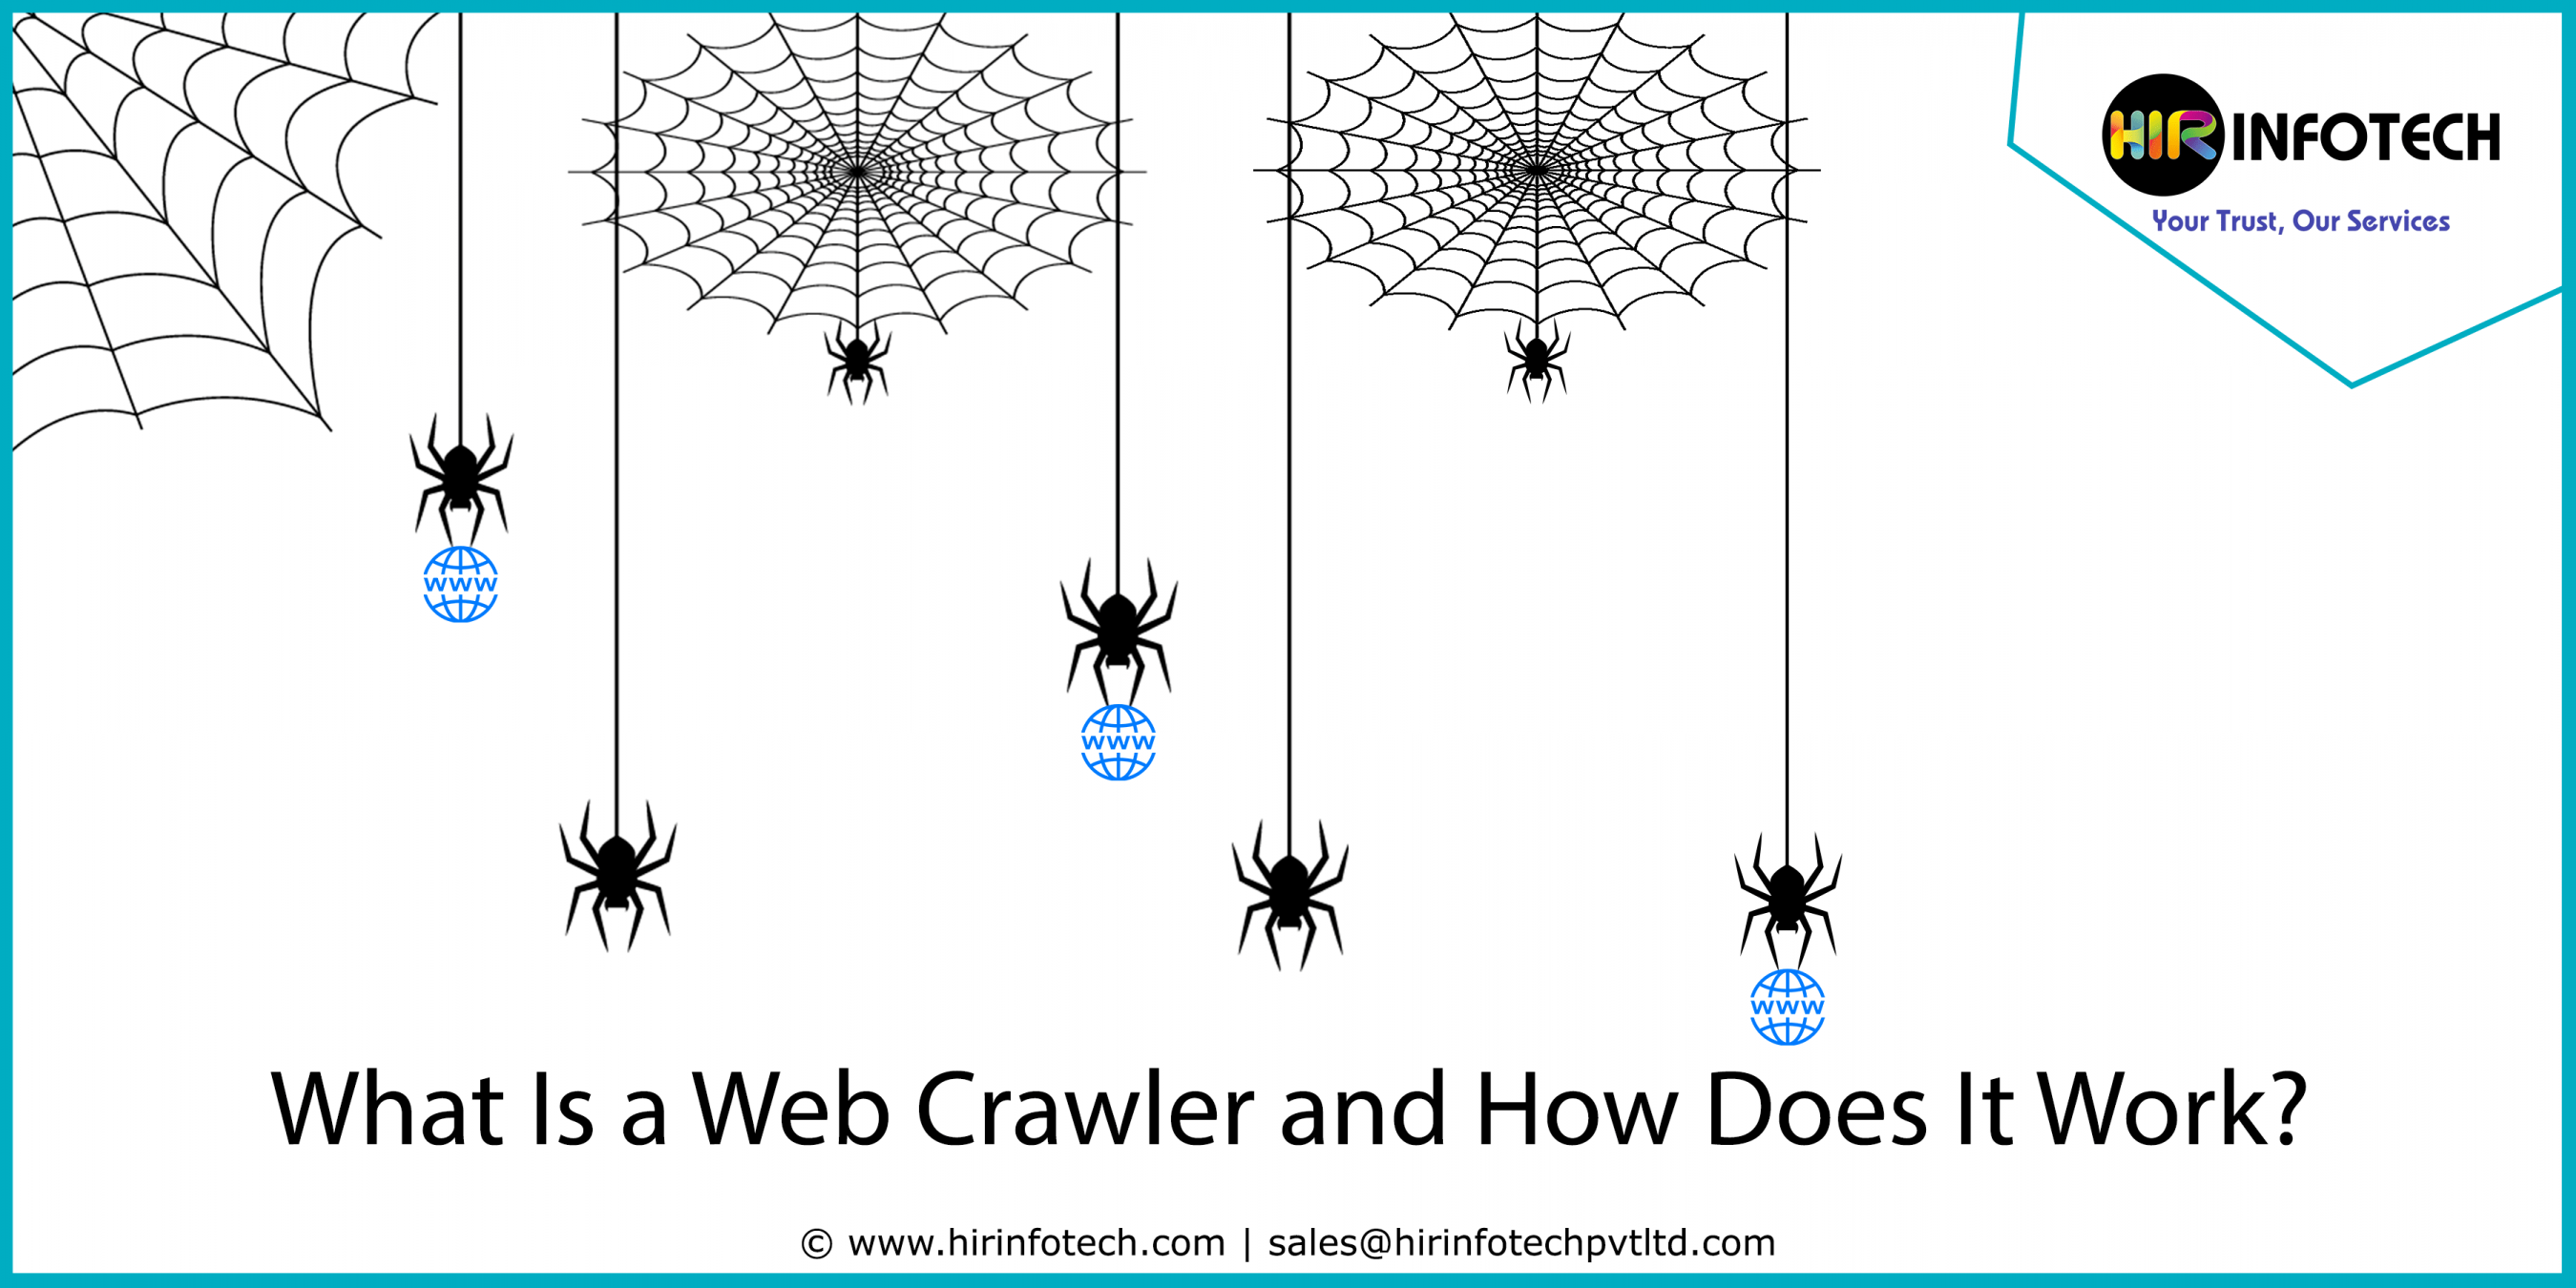 #Crawler #Spider #DataMining #Email #Spider #Crawl #Bot #USA #France #Canada #BusinessGrowth #Technology #Analysis #Data #DataScience #DataAnalytics #BigData #Startup